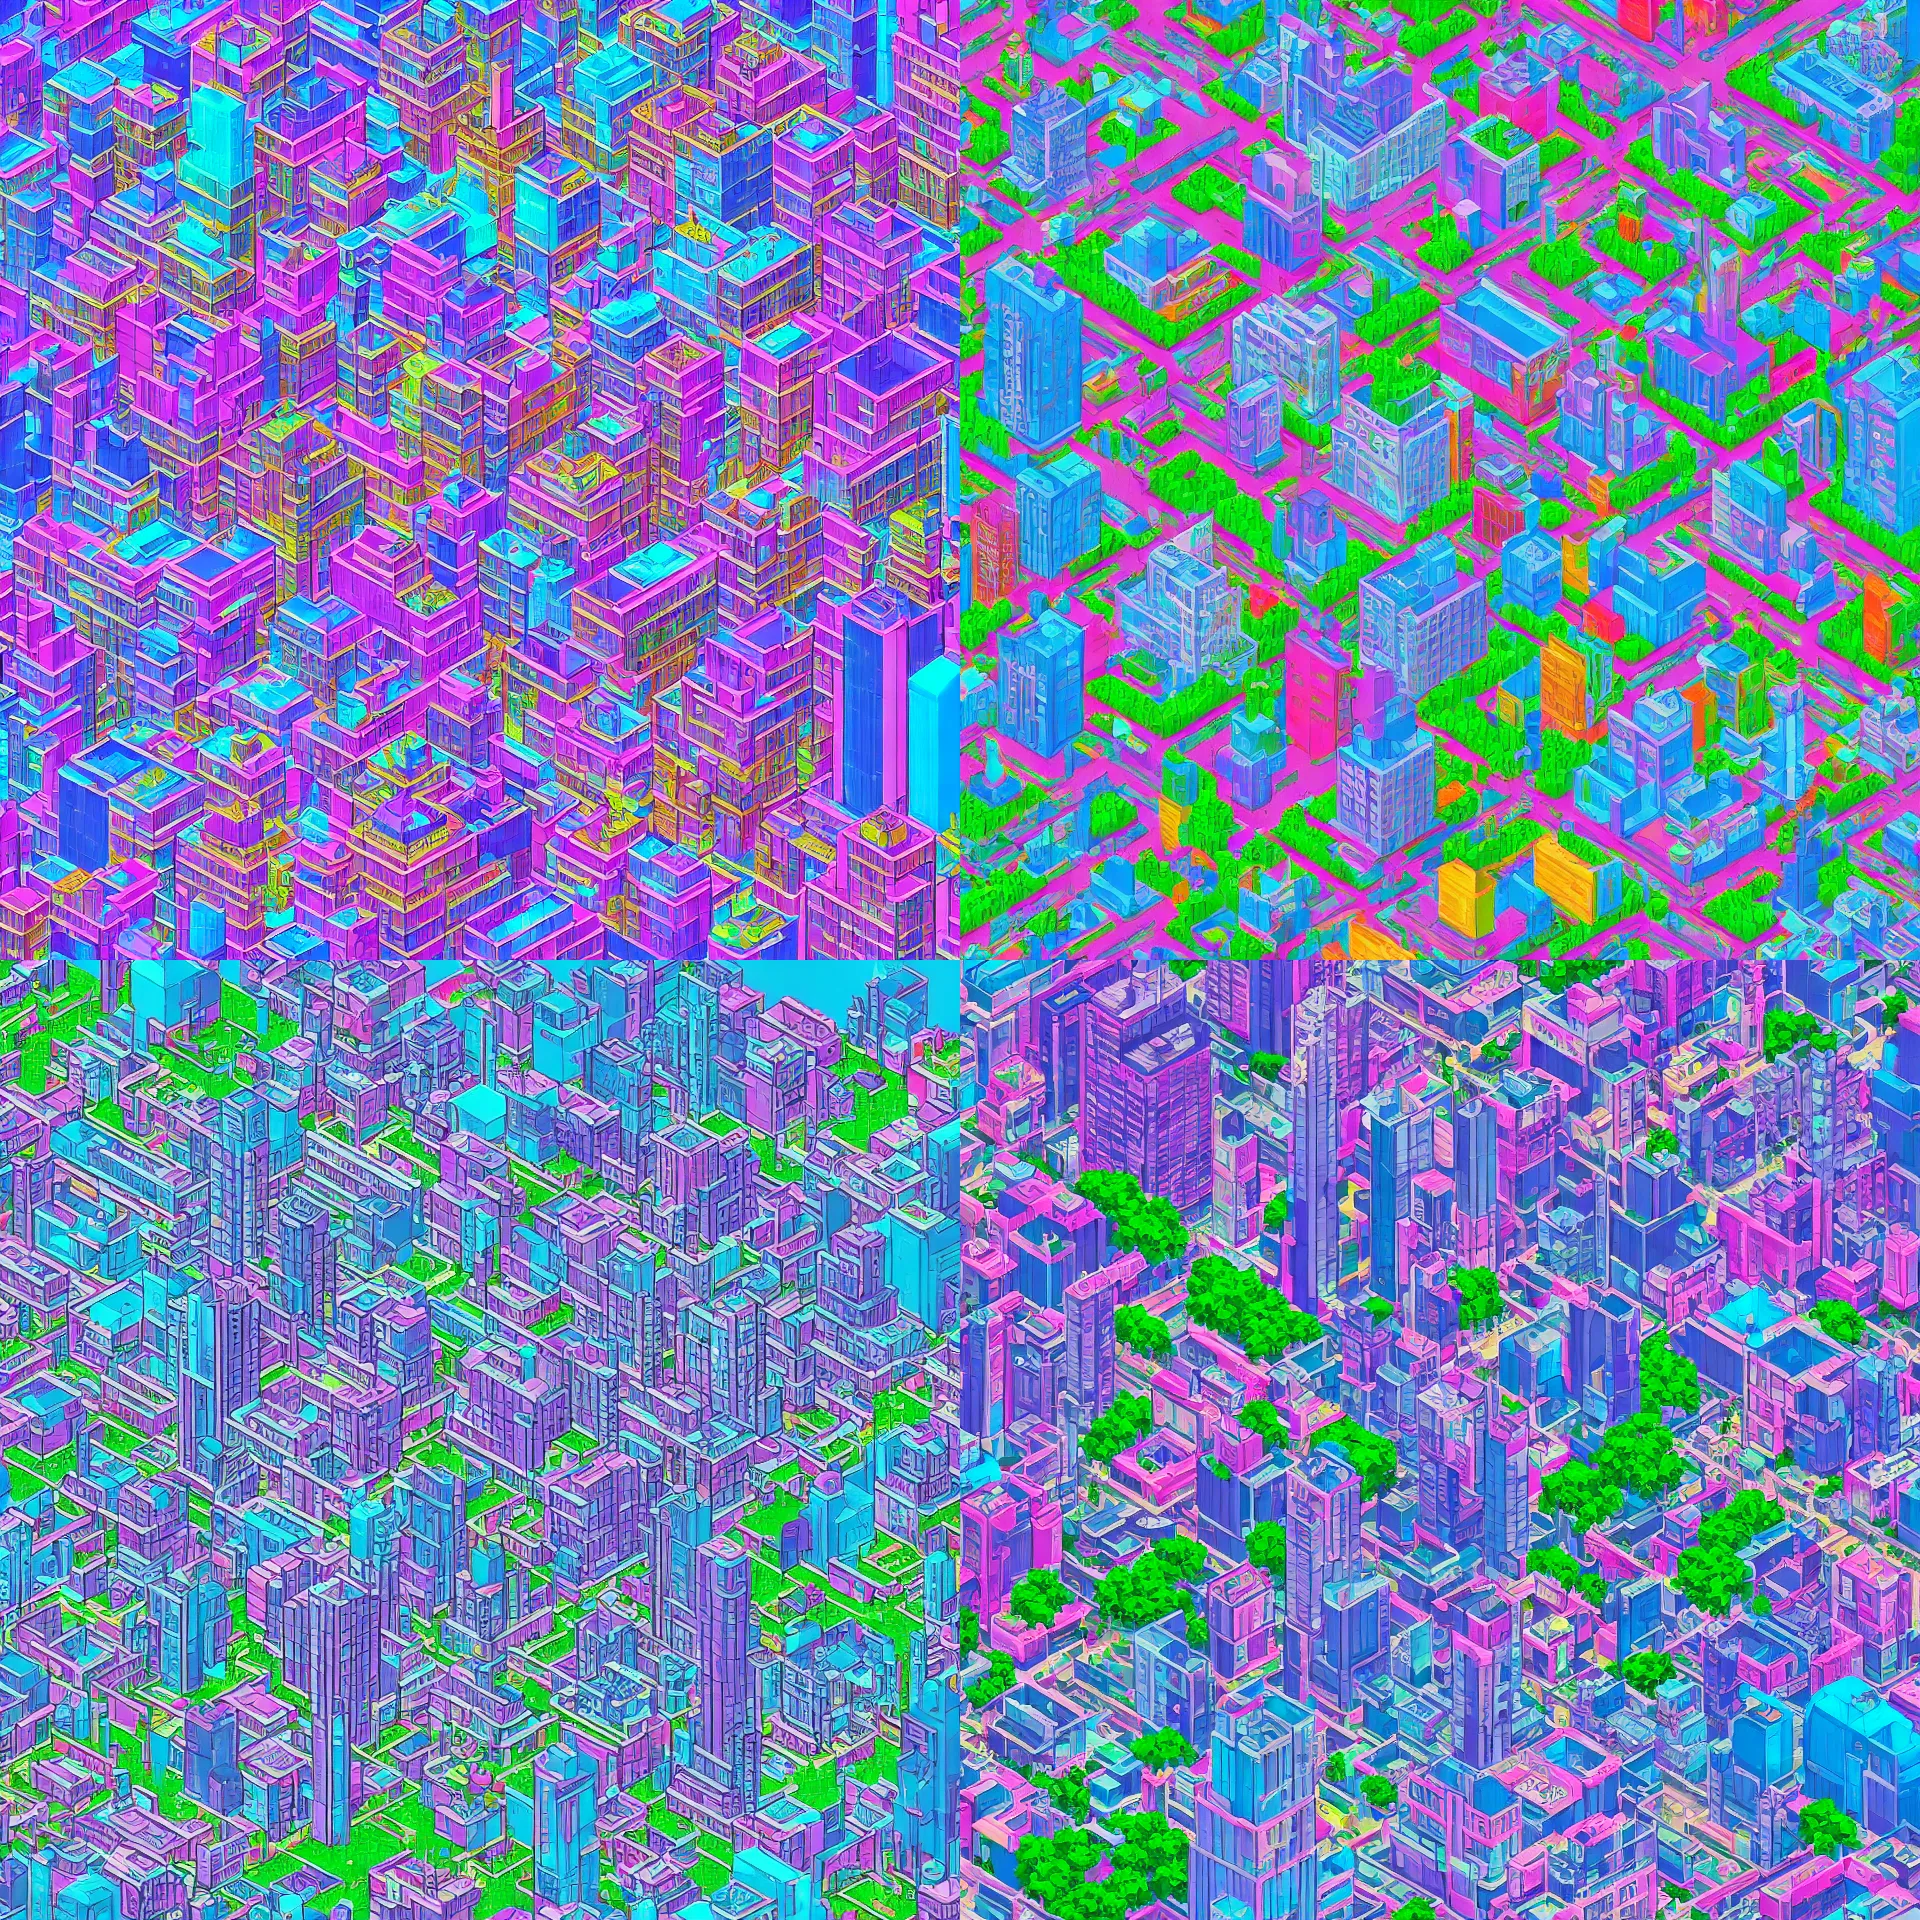 Prompt: vaporwave city, stylized as pixel art